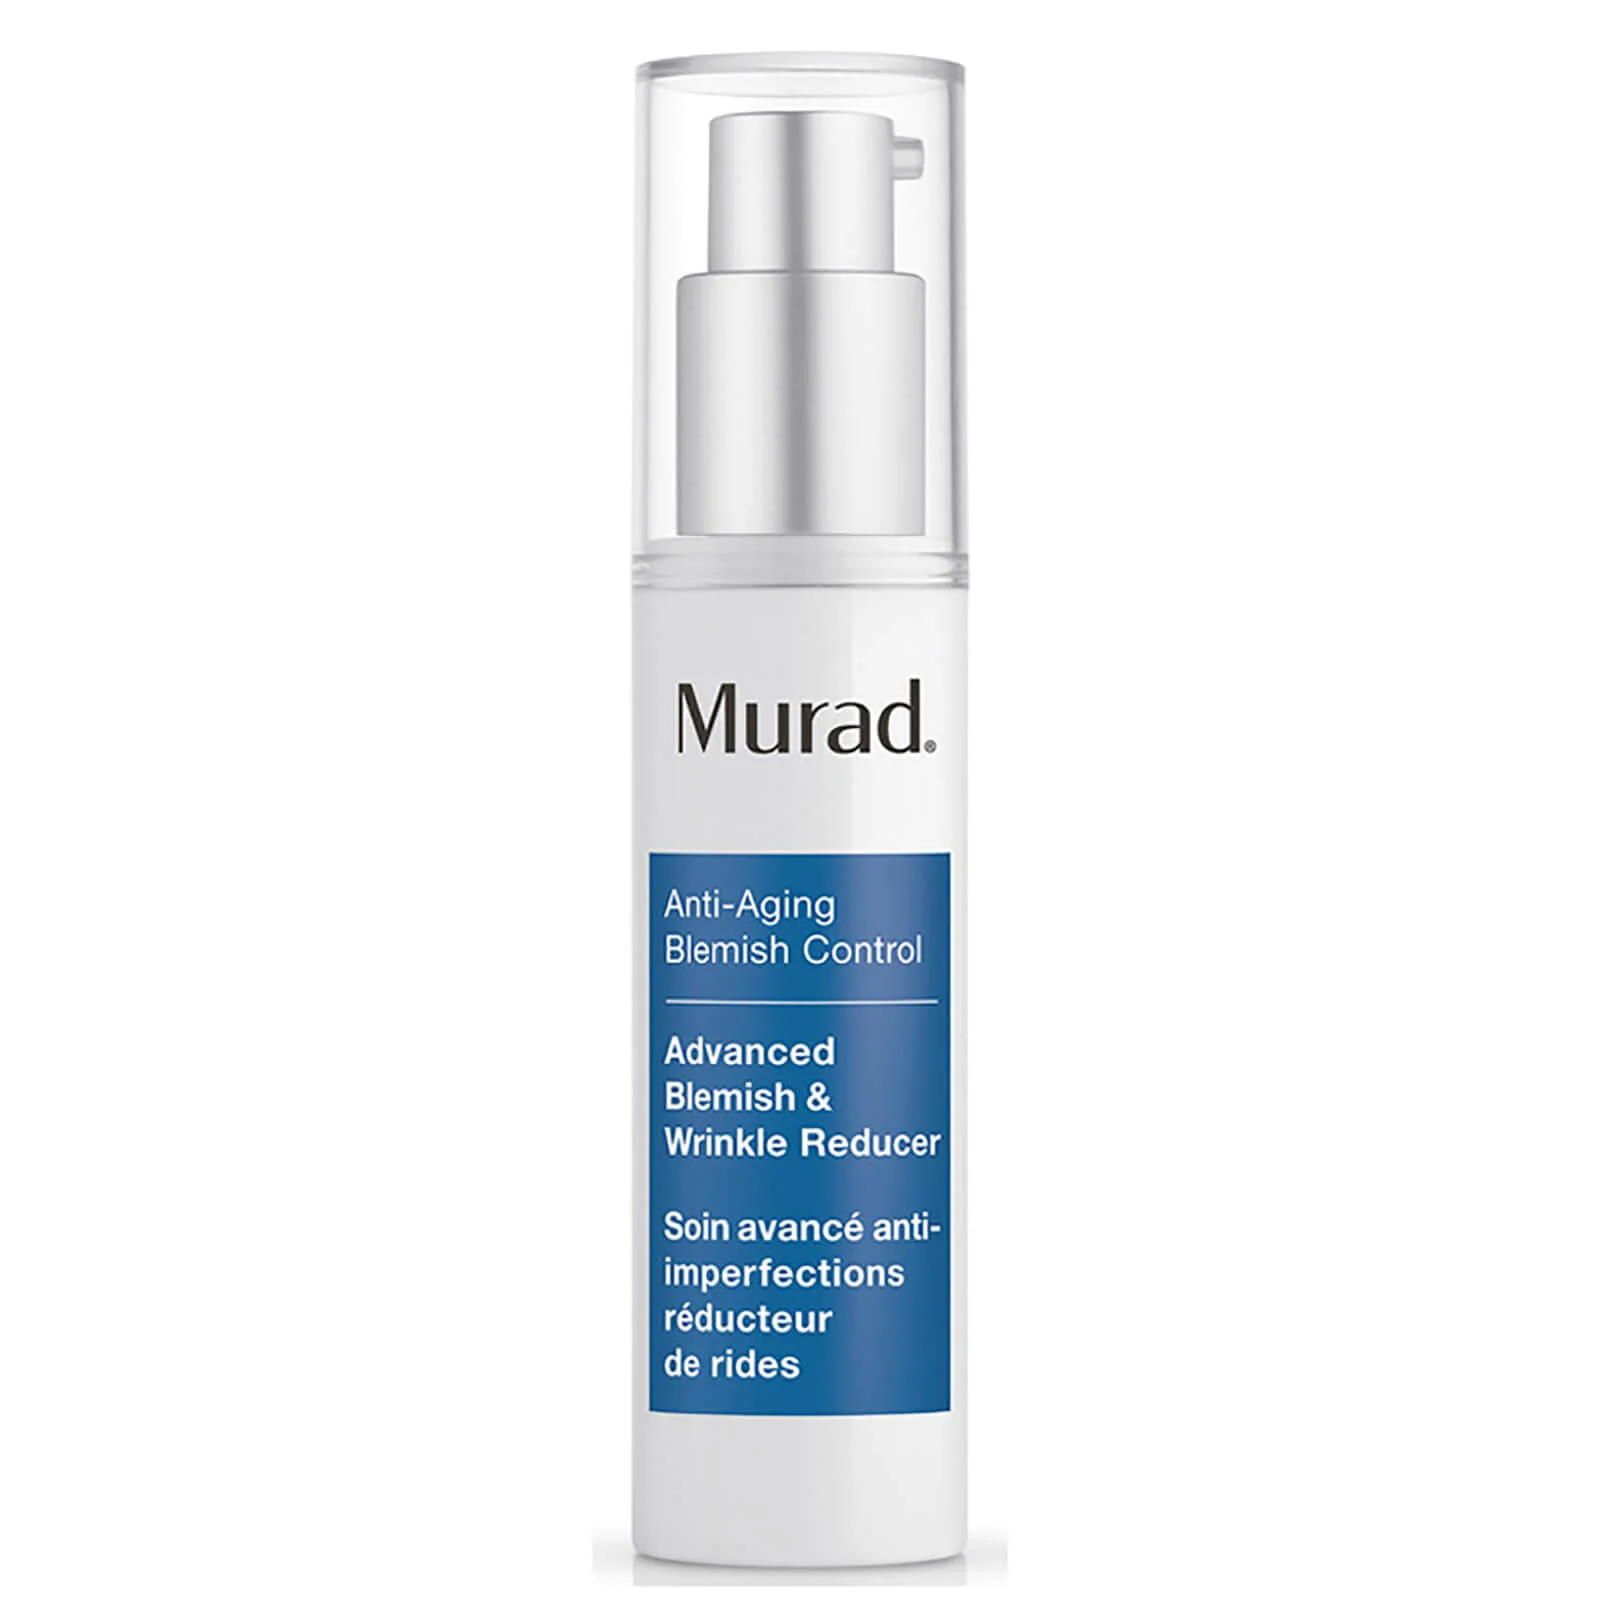 Murad Advanced Blemish & Wrinkle Reducer 30ml Image 1